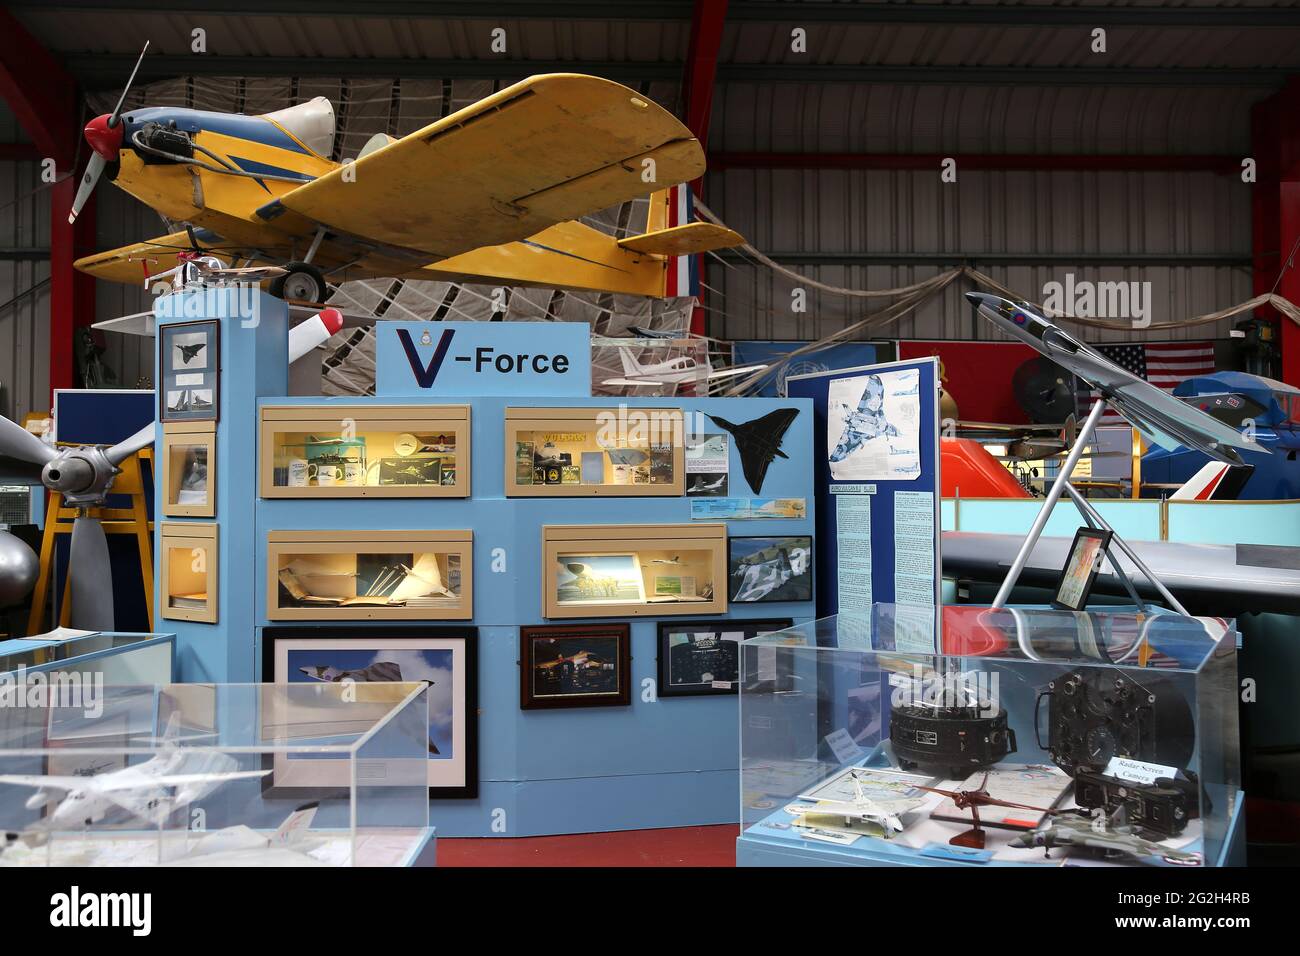 V-Force nucleare deterrente, Midland Air Museum, Coventry Airport, Baginton, Warwickshire, Inghilterra, Gran Bretagna, Regno Unito, Europa Foto Stock